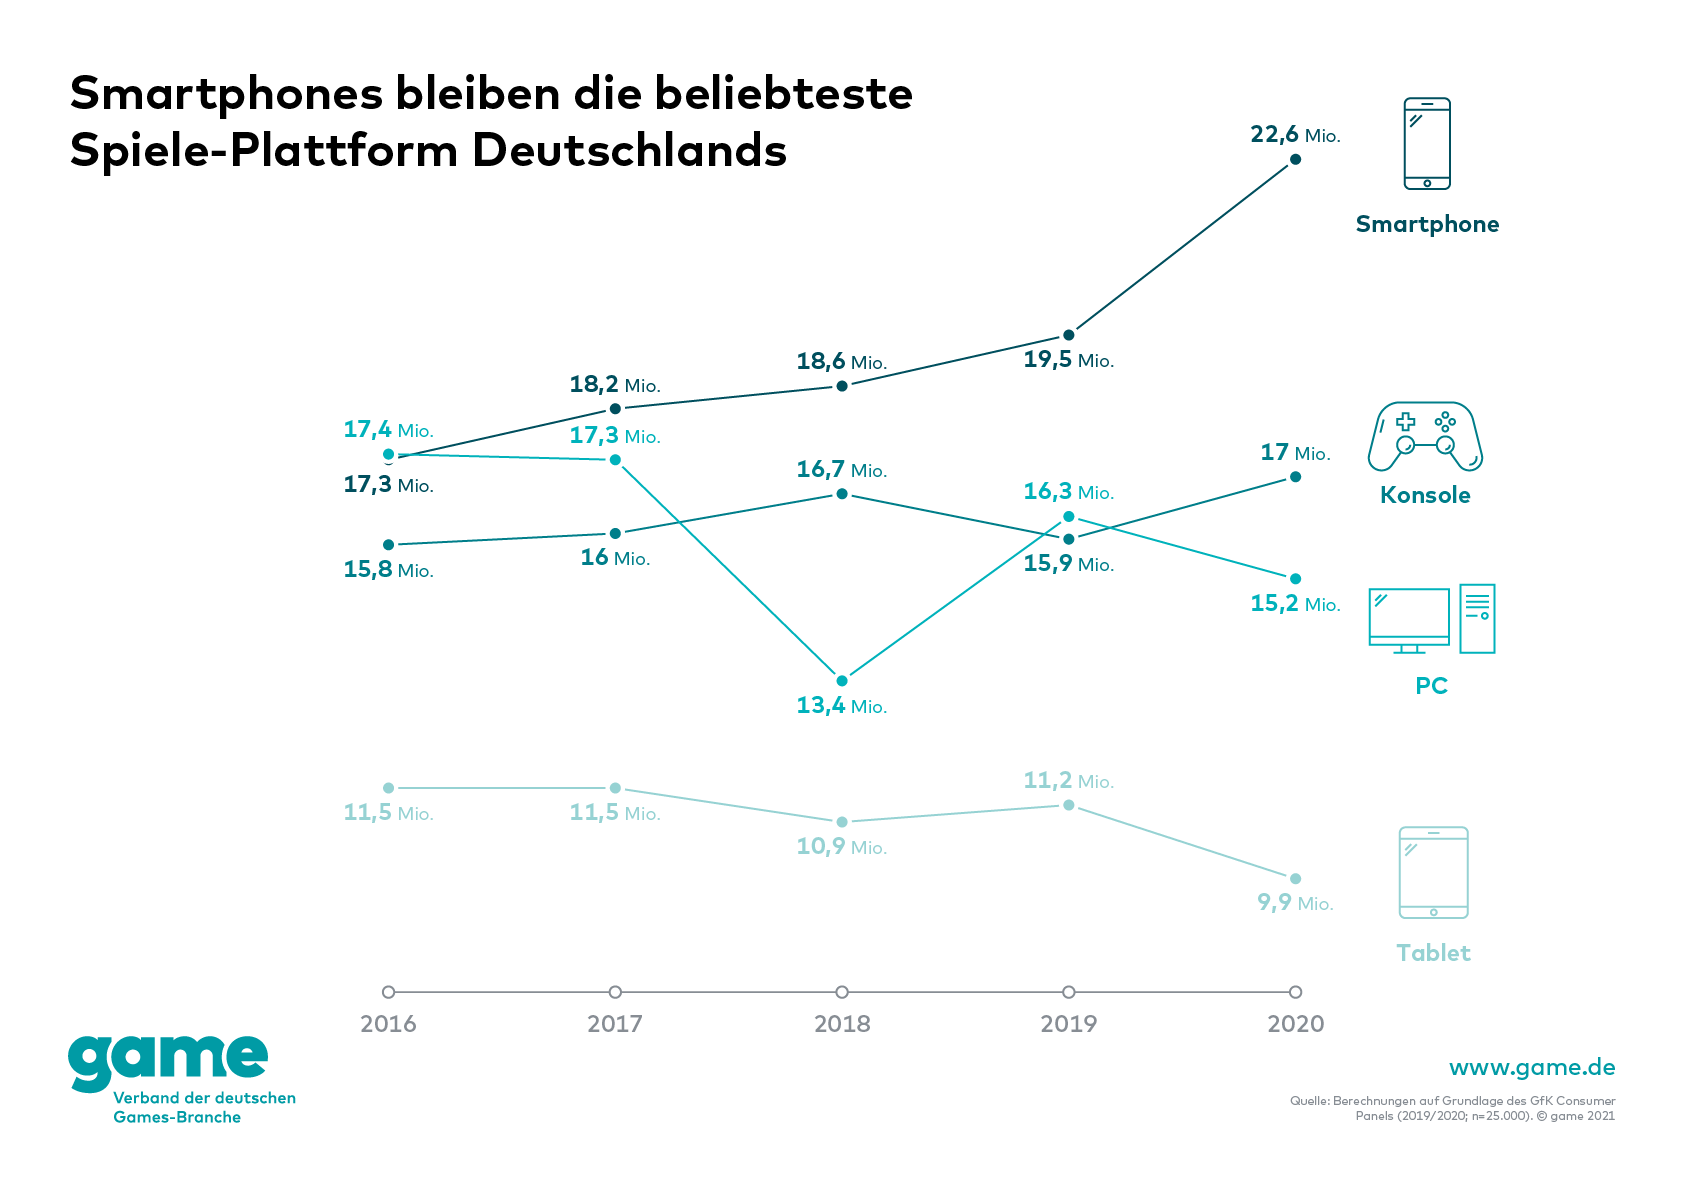 Smartphones beliebteste Spiele-Plattform Deutschlands